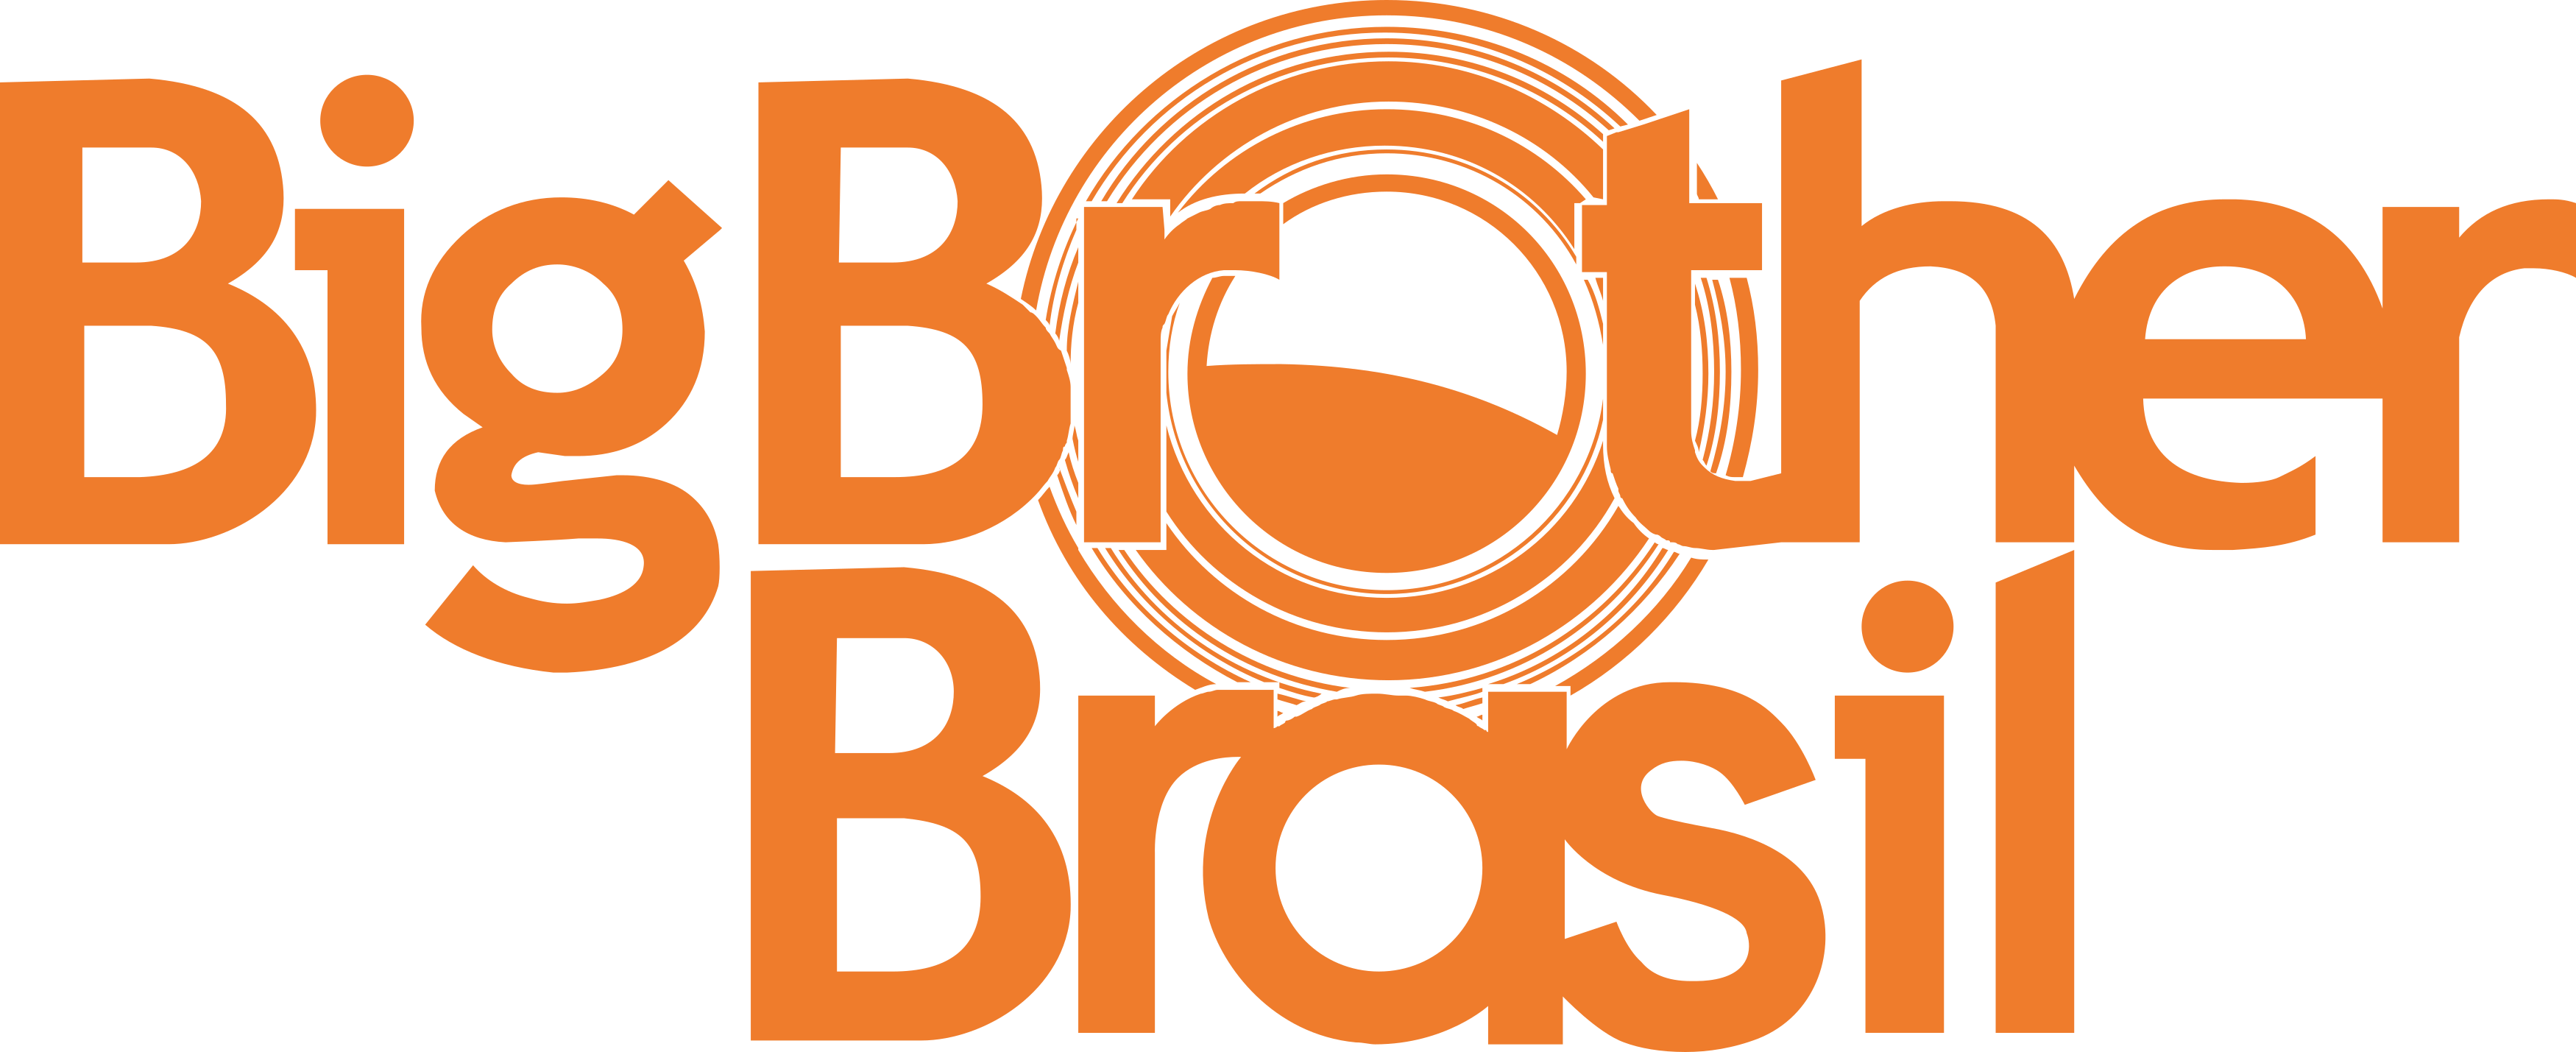 bbb logo big brother brasil logo.